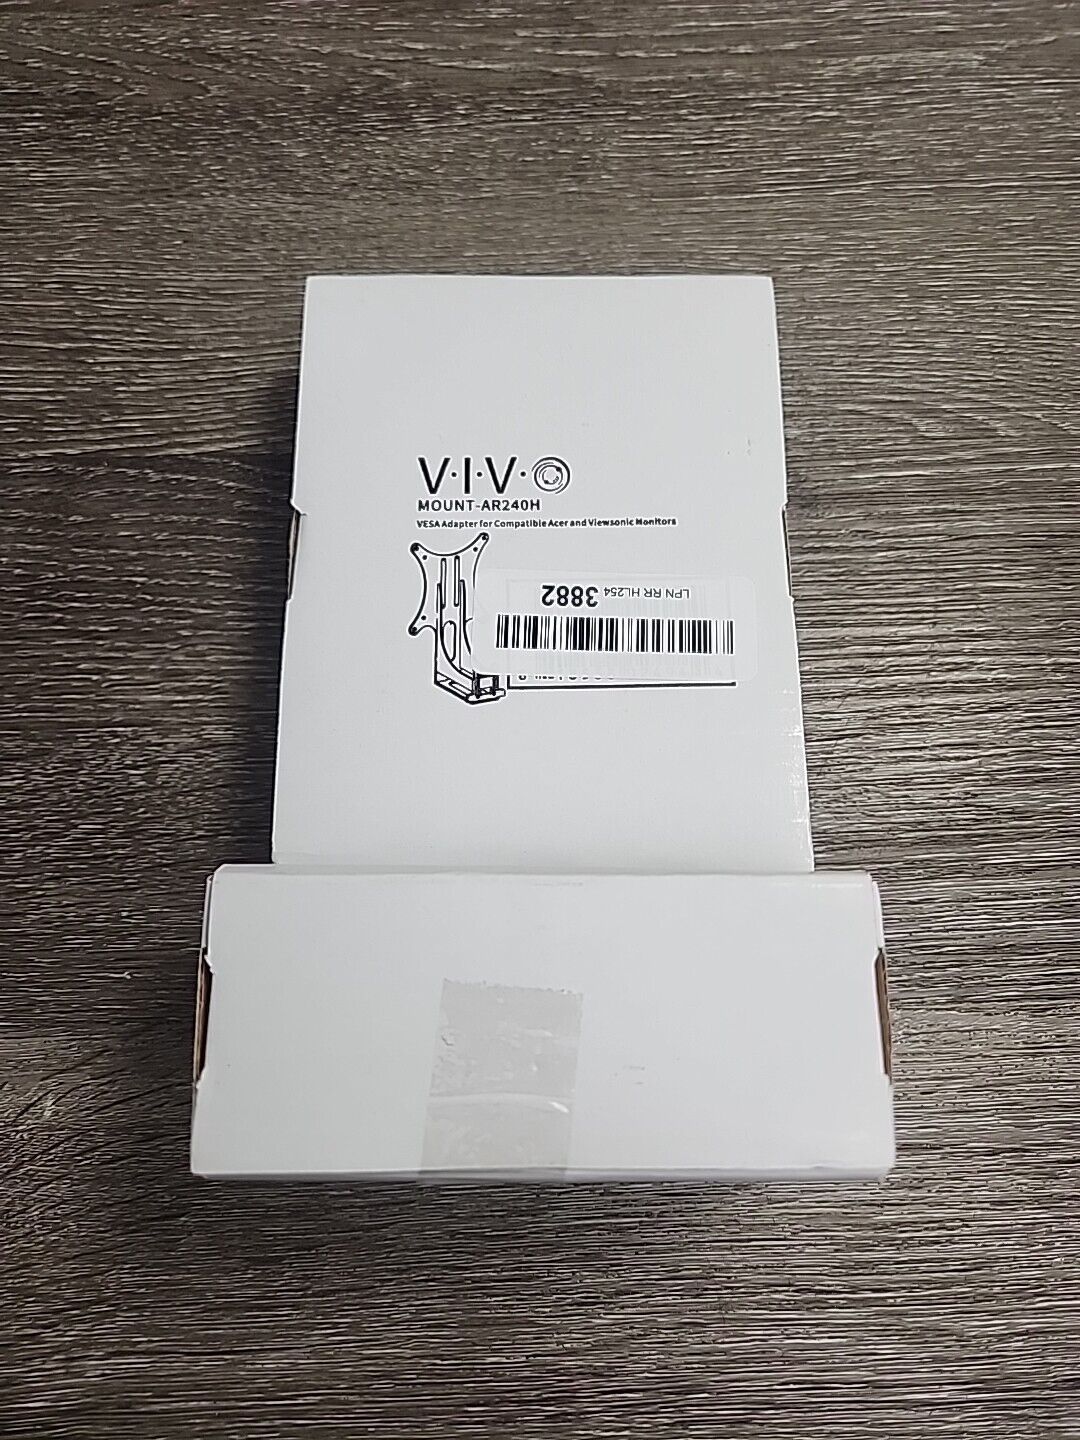 VIVO Quick Attach VESA Adapter Bracket Designed for Acer & Viewsonic Monitors